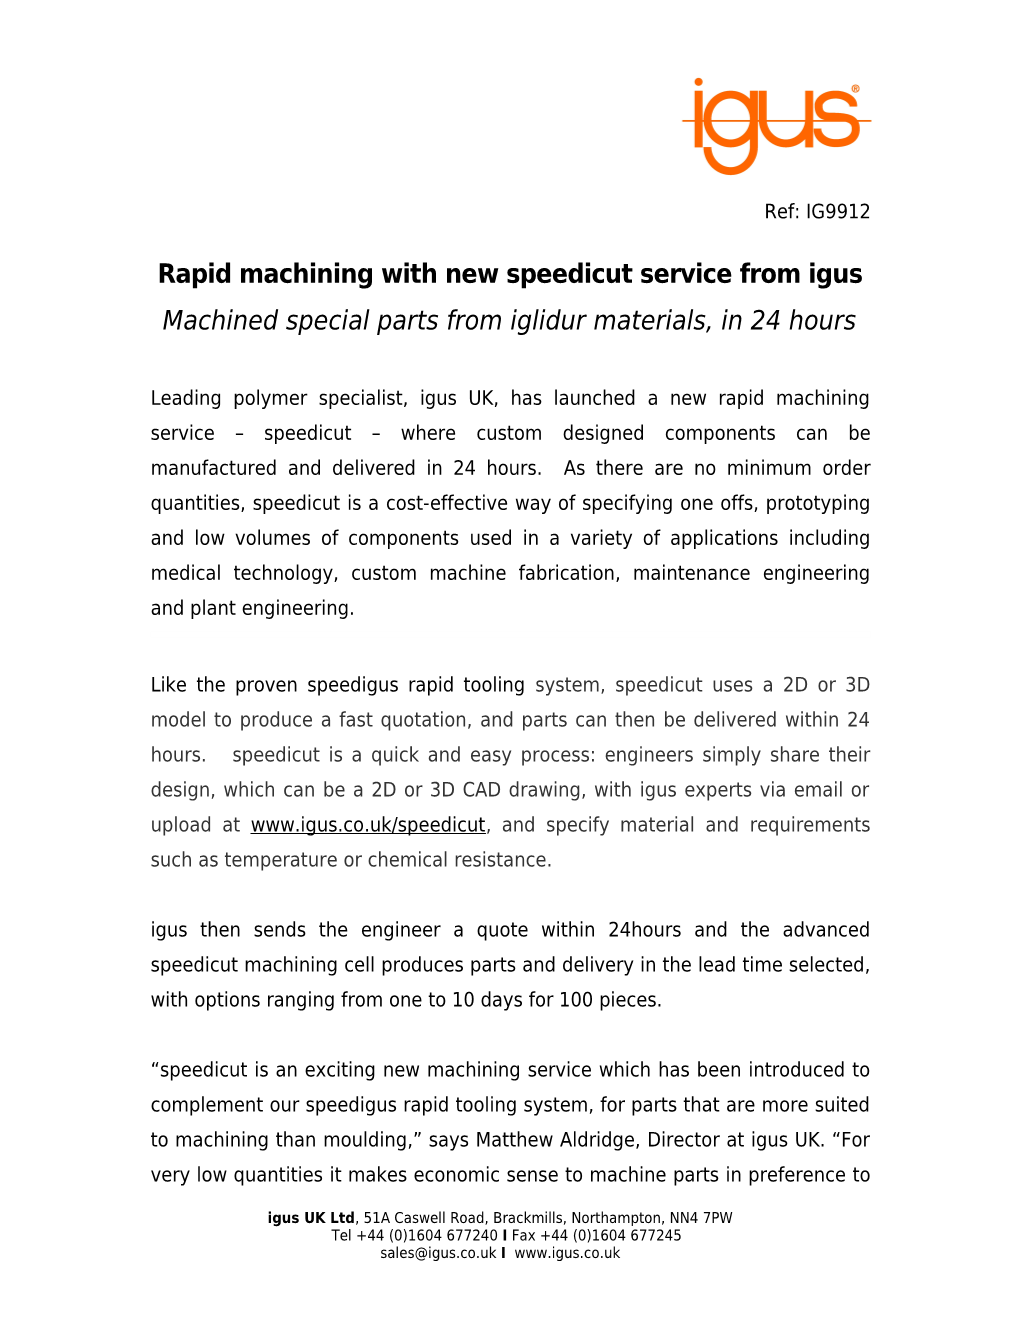 Rapid Machining with New Speedicut Service from Igus